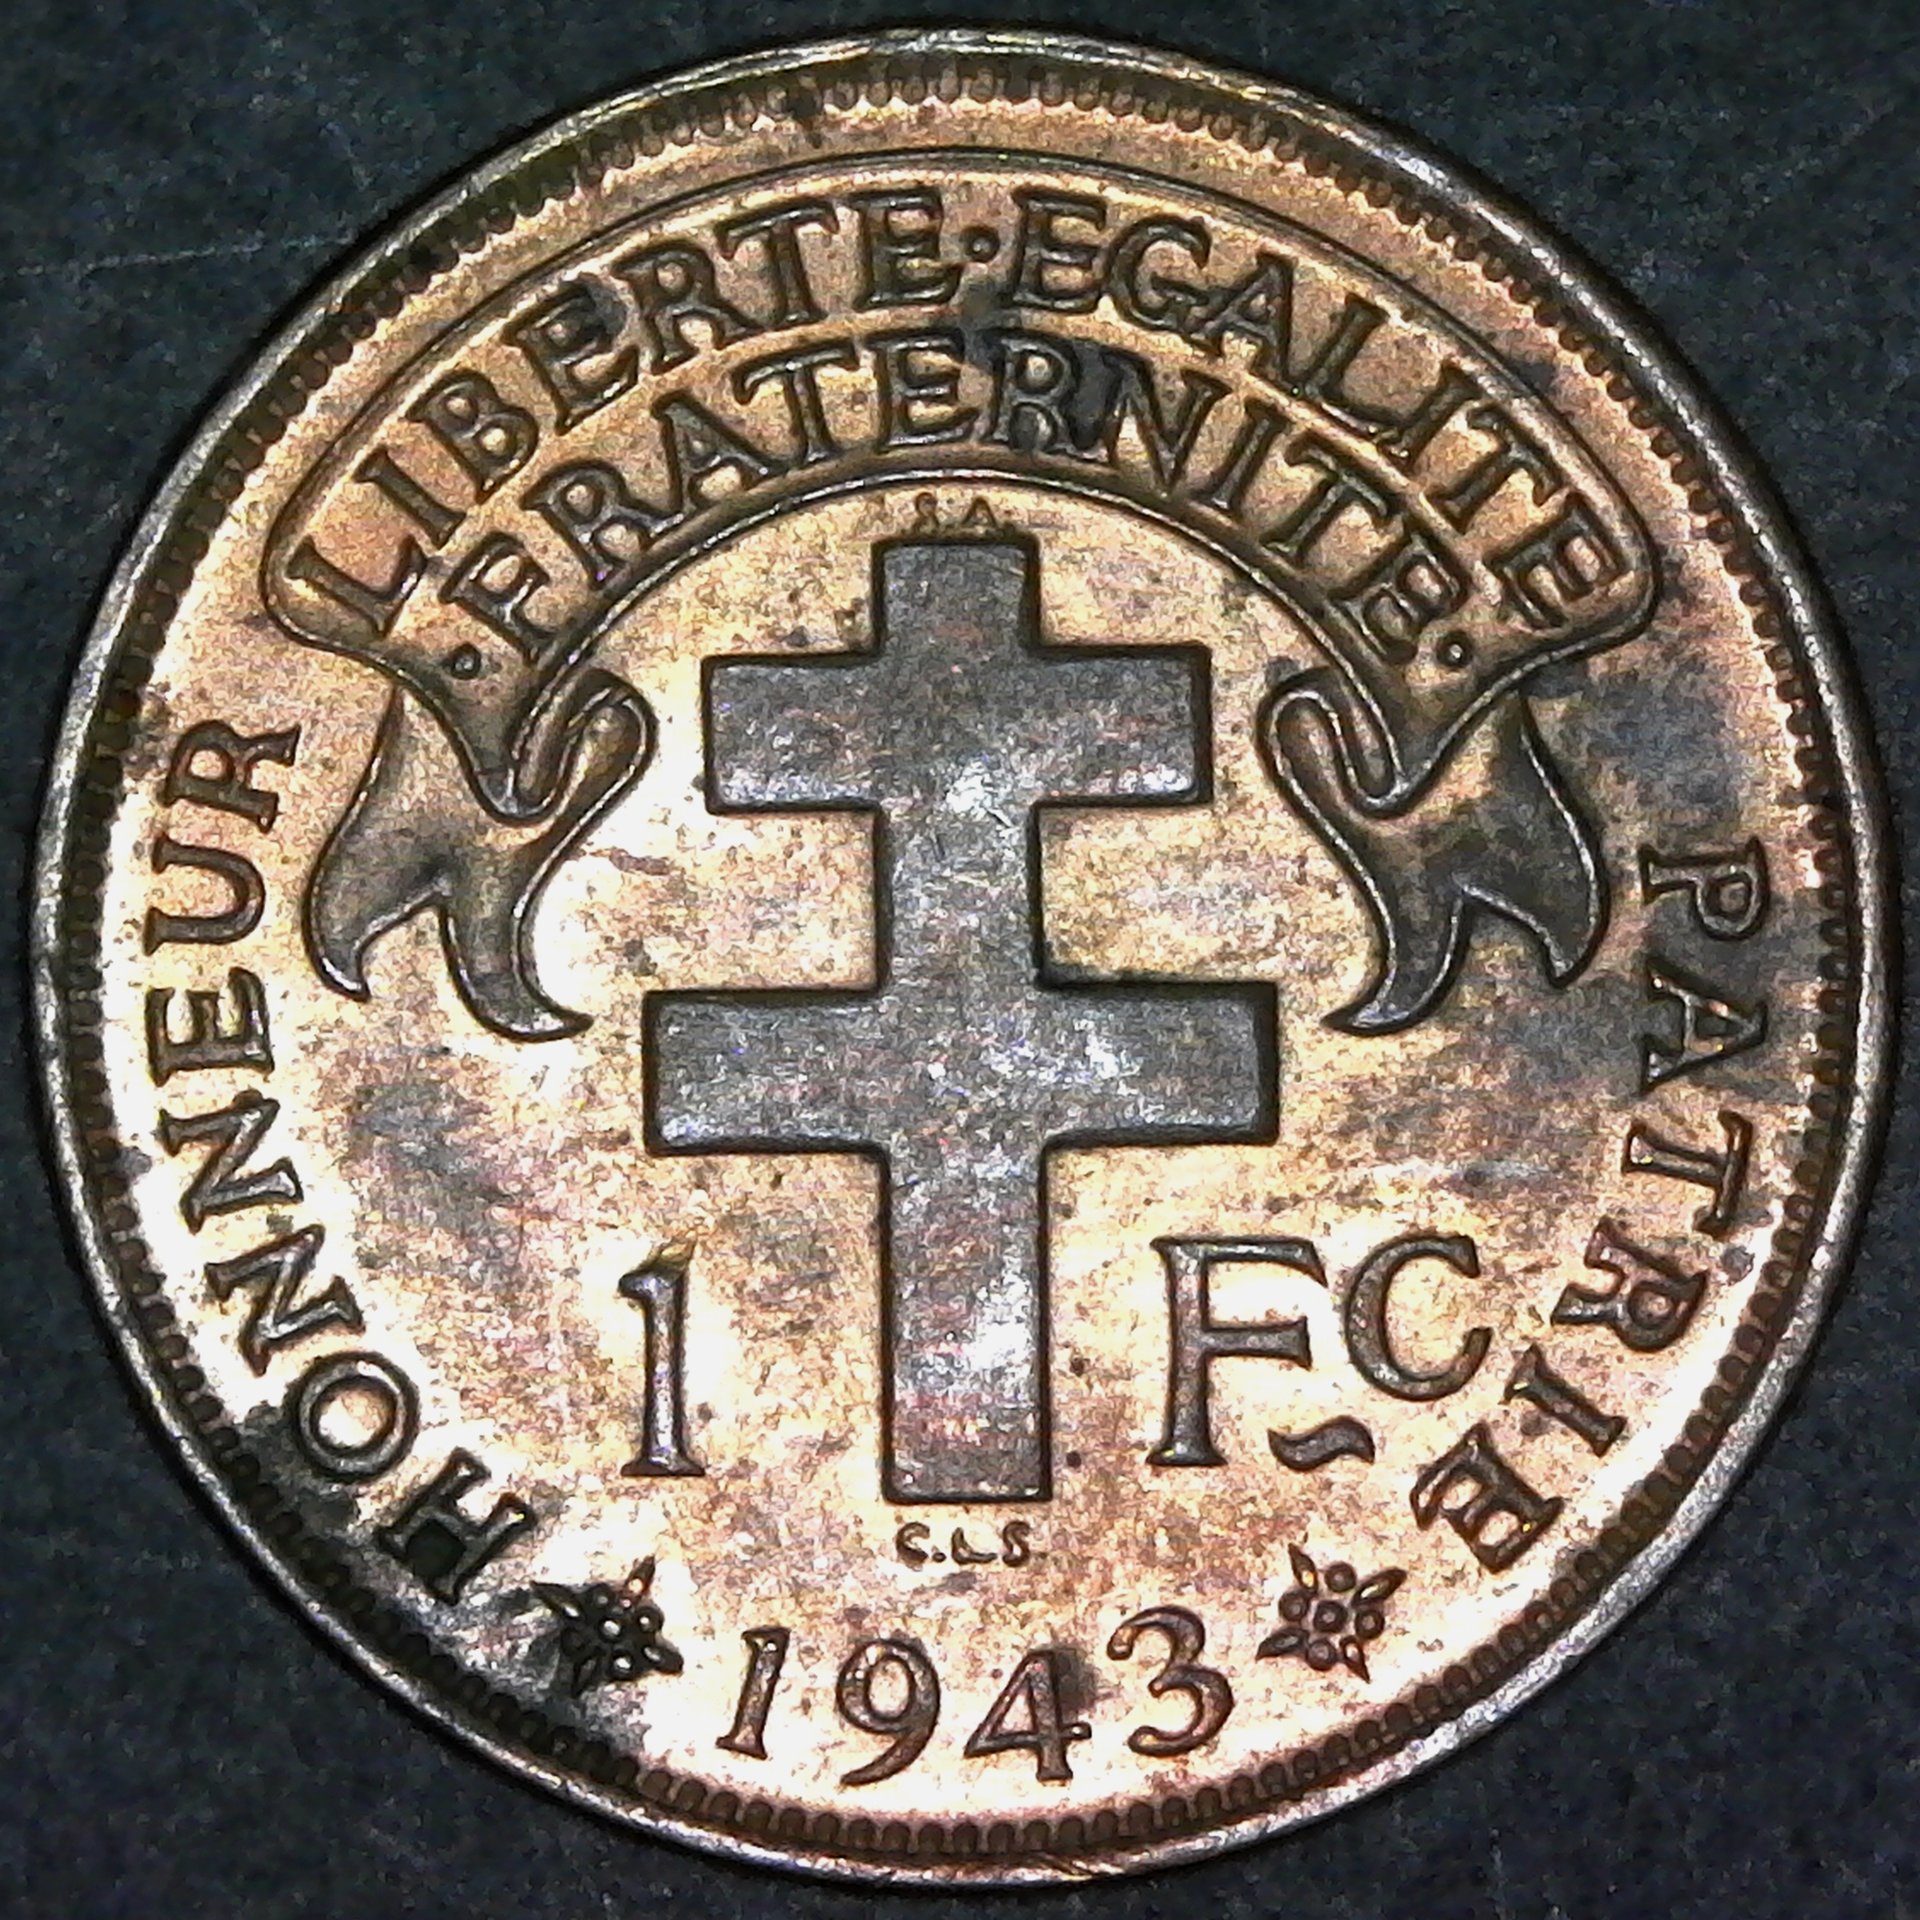 French Equatorial Africa 1 Franc 1943 obv A.jpg